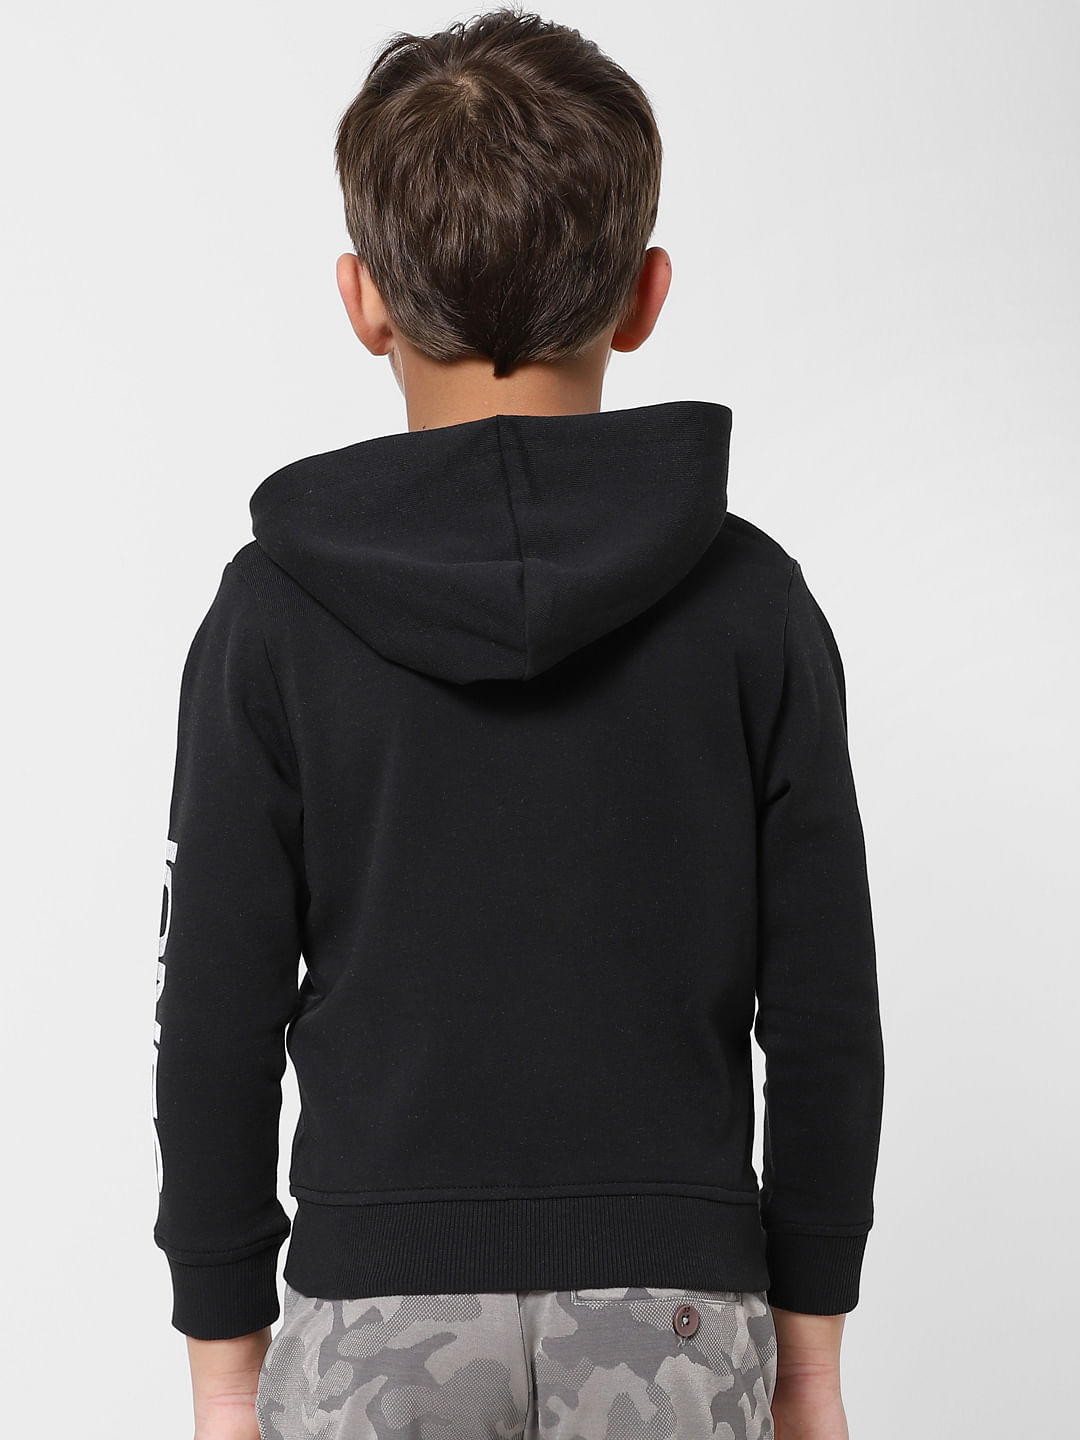 BOYS Black Zip Up Hooded Sweatshirt|291257401